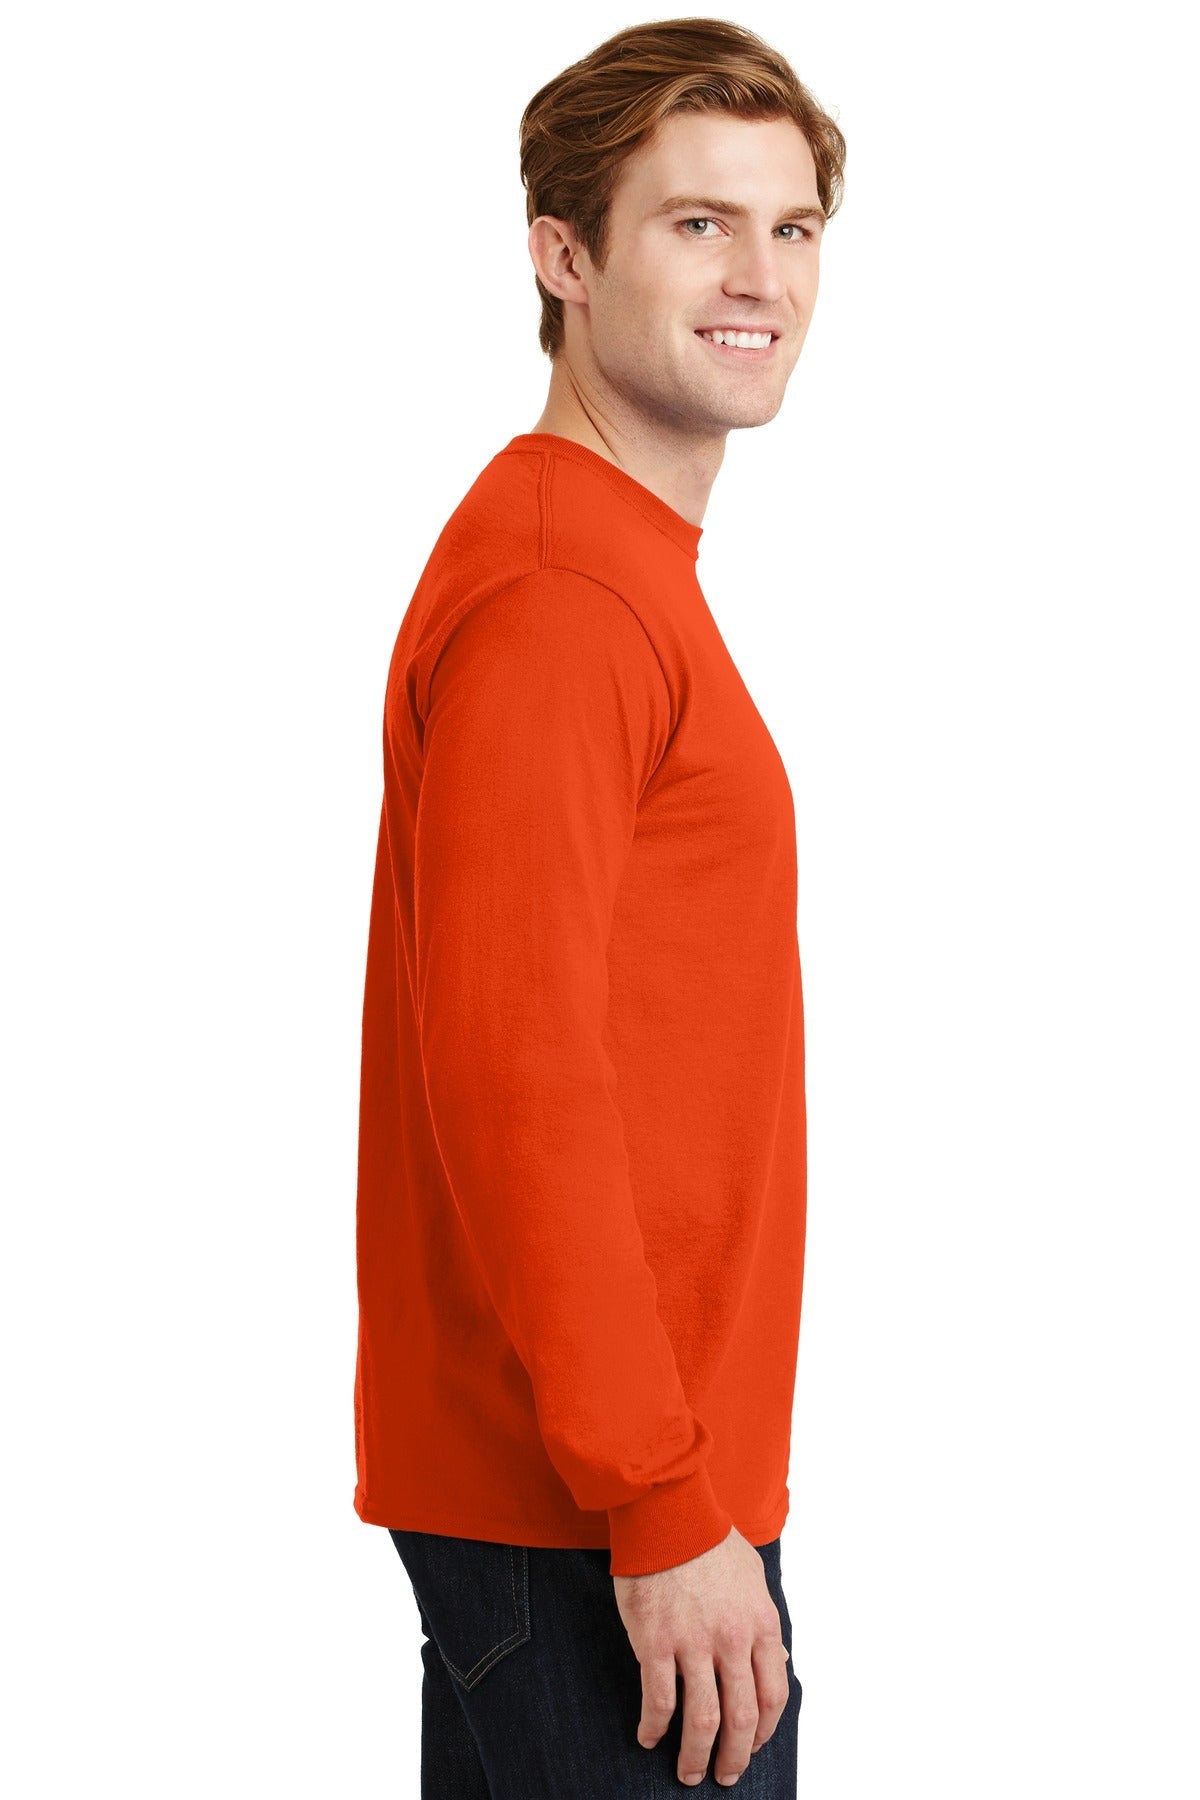 Gildan® - DryBlend® 50 Cotton/50 Poly Long Sleeve T-Shirt. 8400 [Orange] - DFW Impression